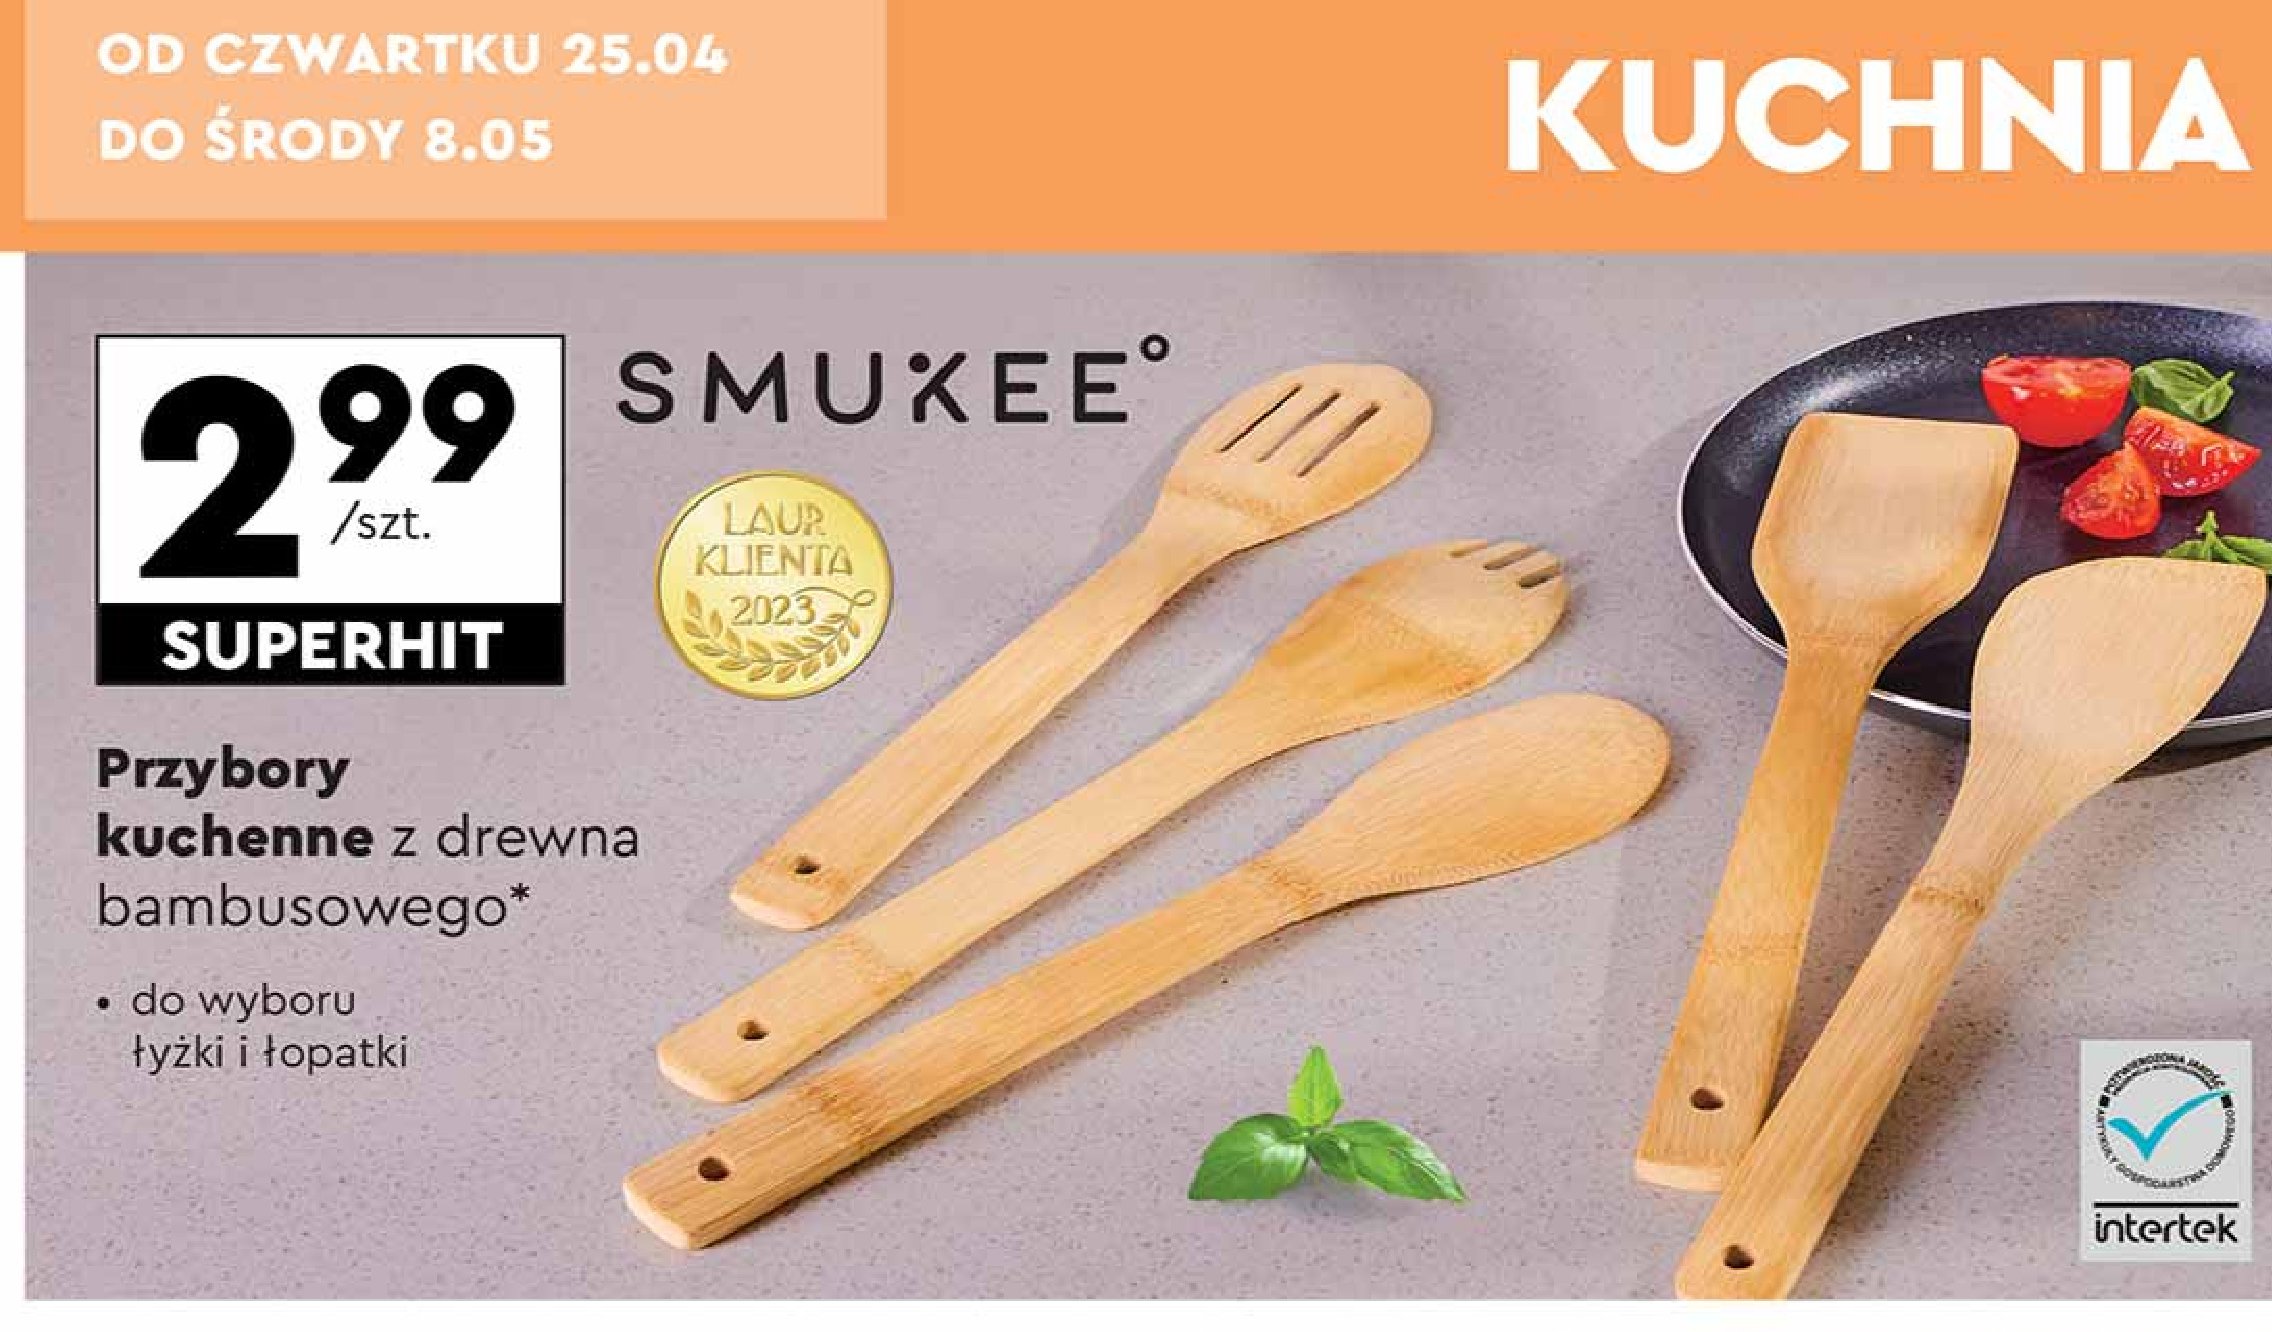 Łyżka bambusowa Smukee kitchen promocja w Biedronka